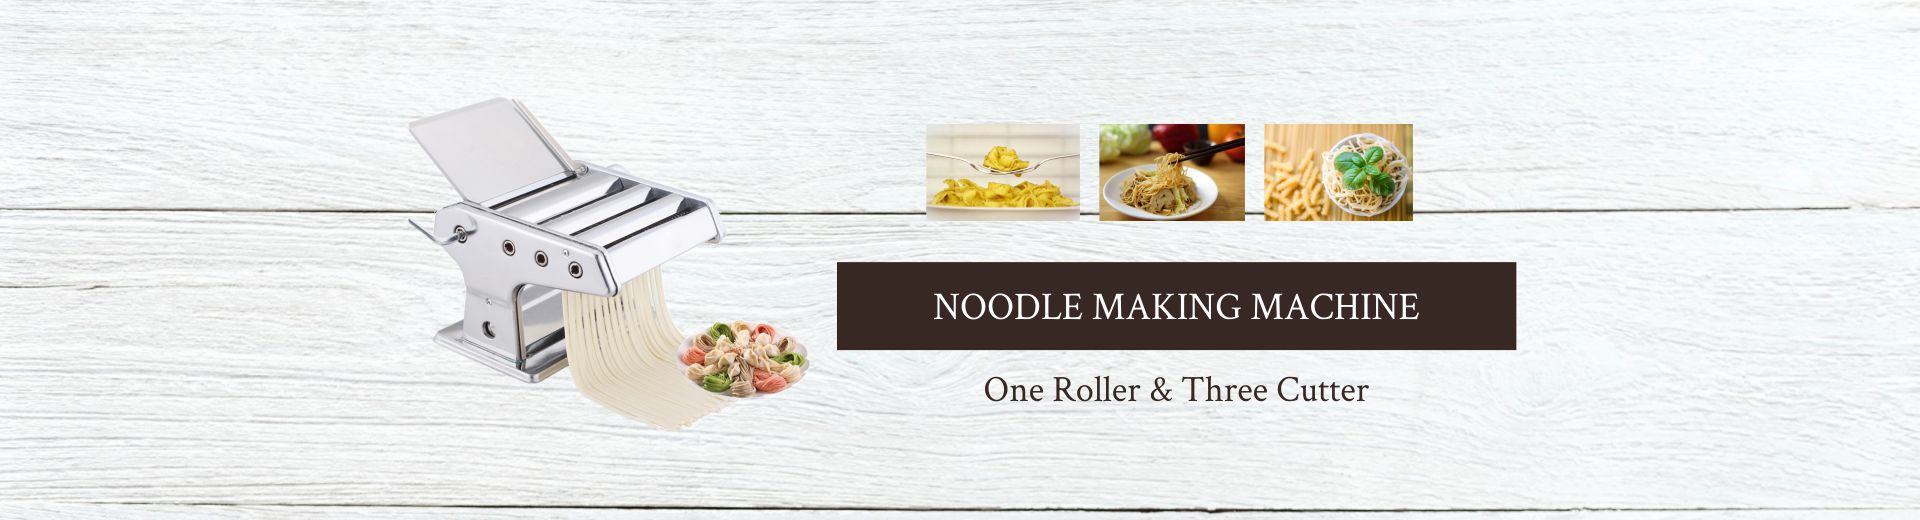 Noodle making machine: rotimation